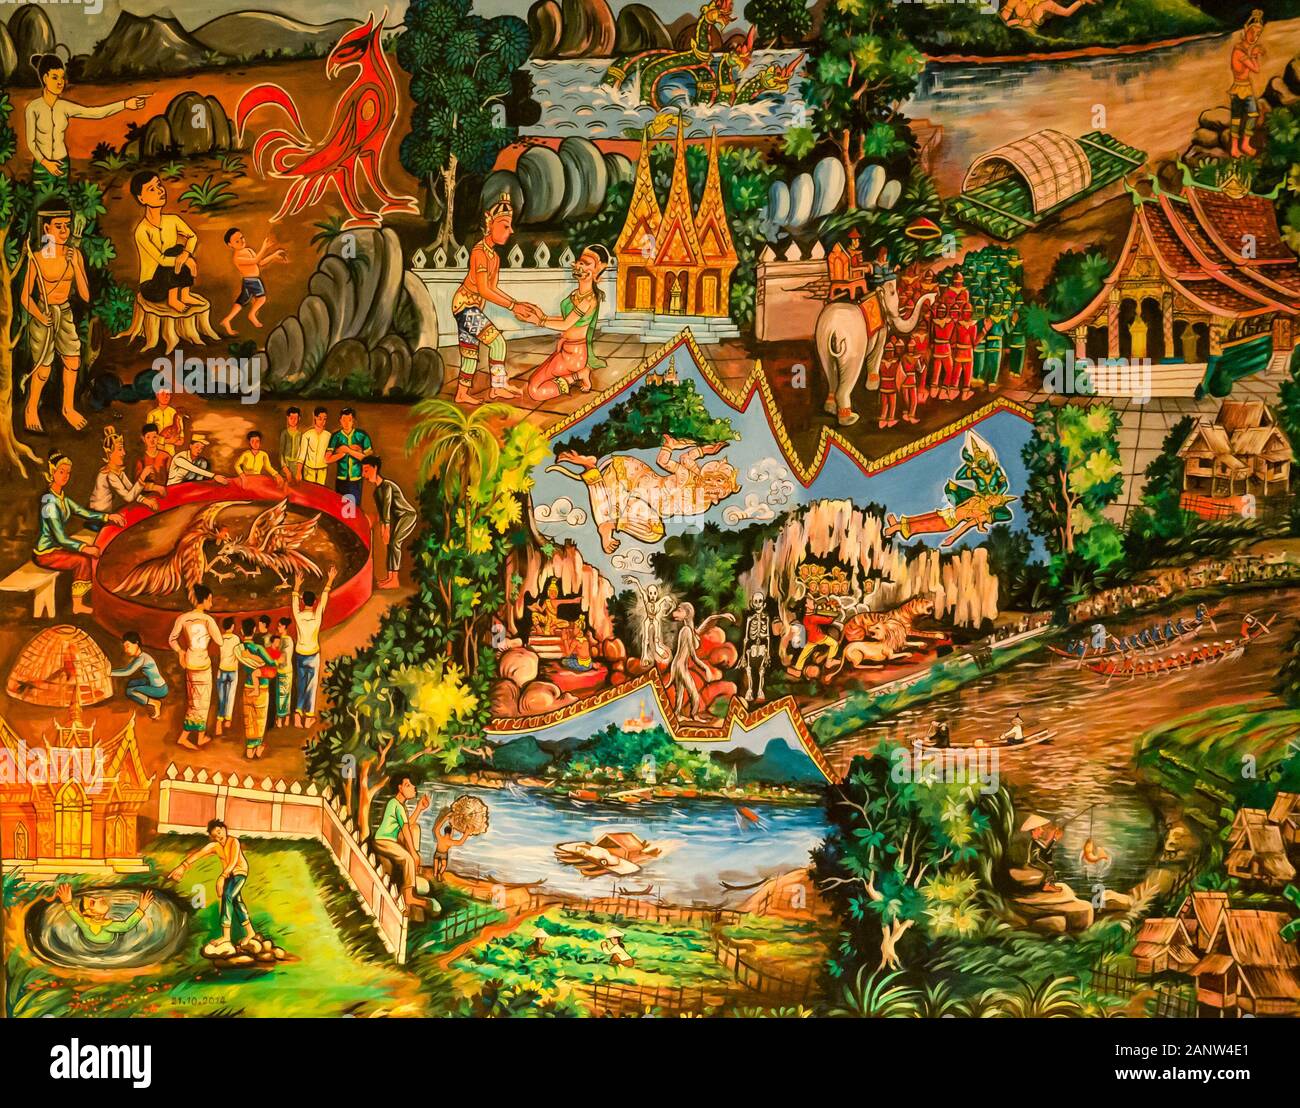 Colourful hanging depicting local folklore, way of life & storytelling, Luang Prabang, Laos, Southeast Asia Stock Photo